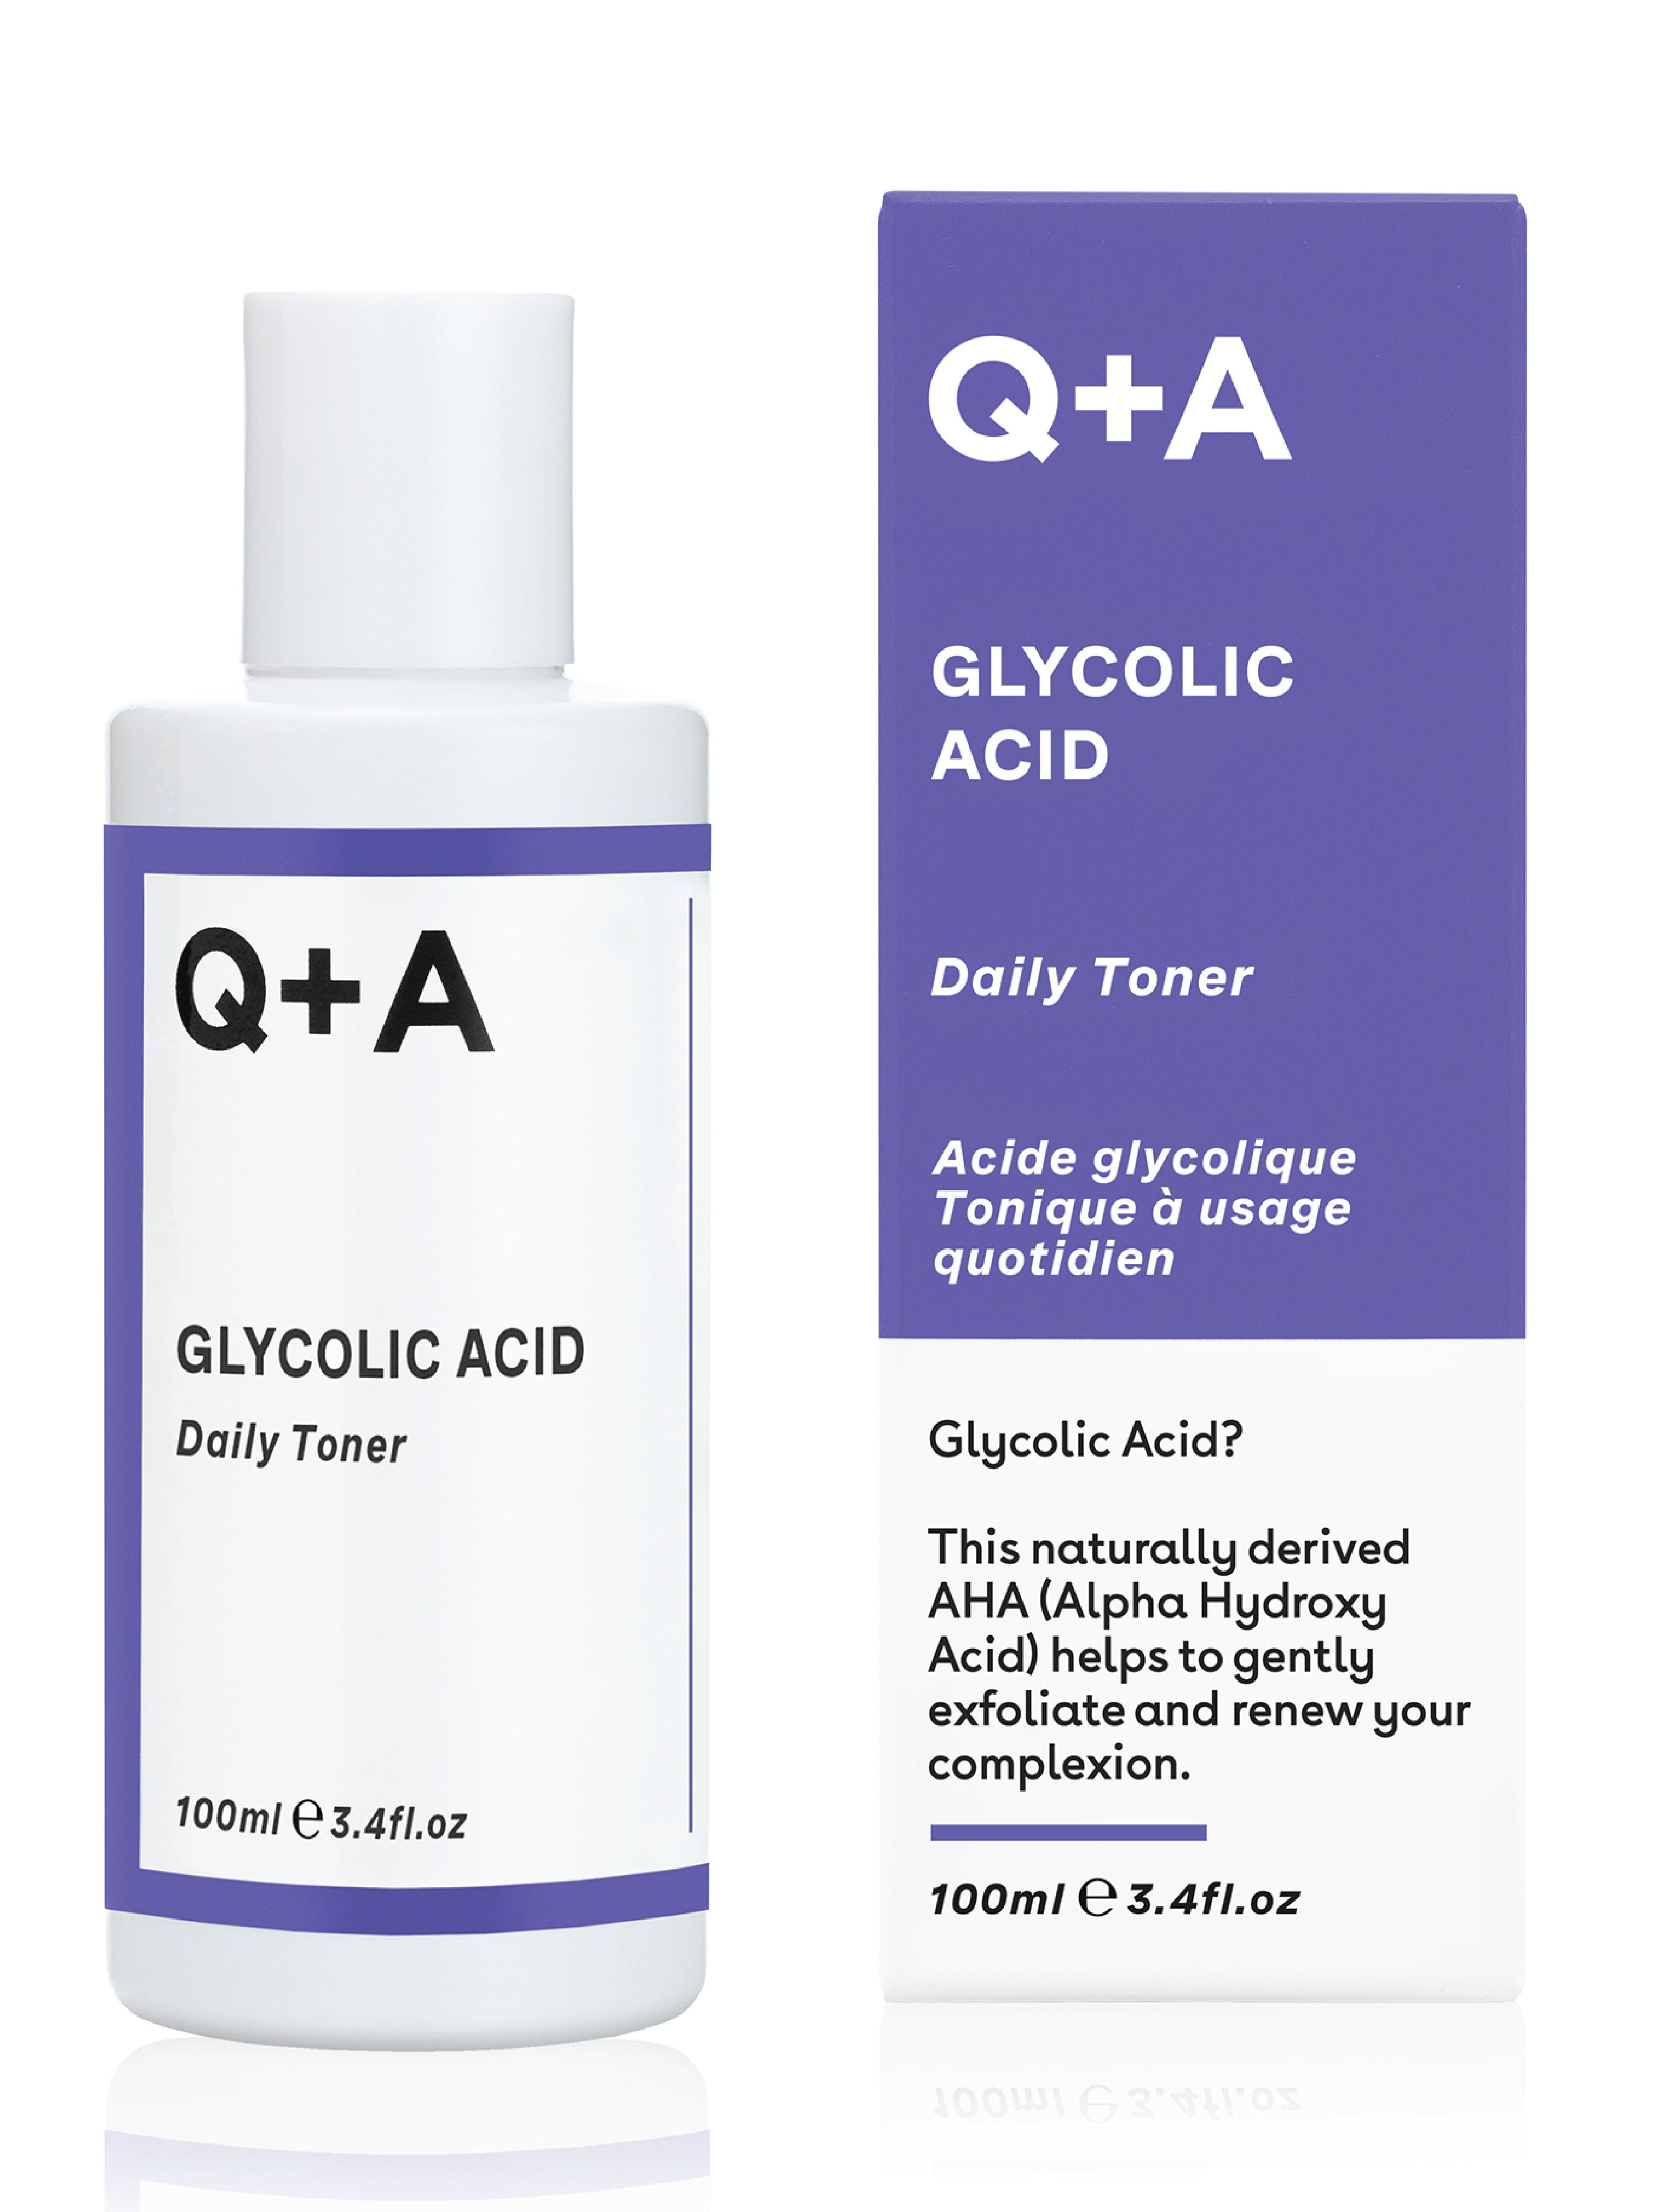 Q+A Glycolic Acid Daily Toner, 100 ml